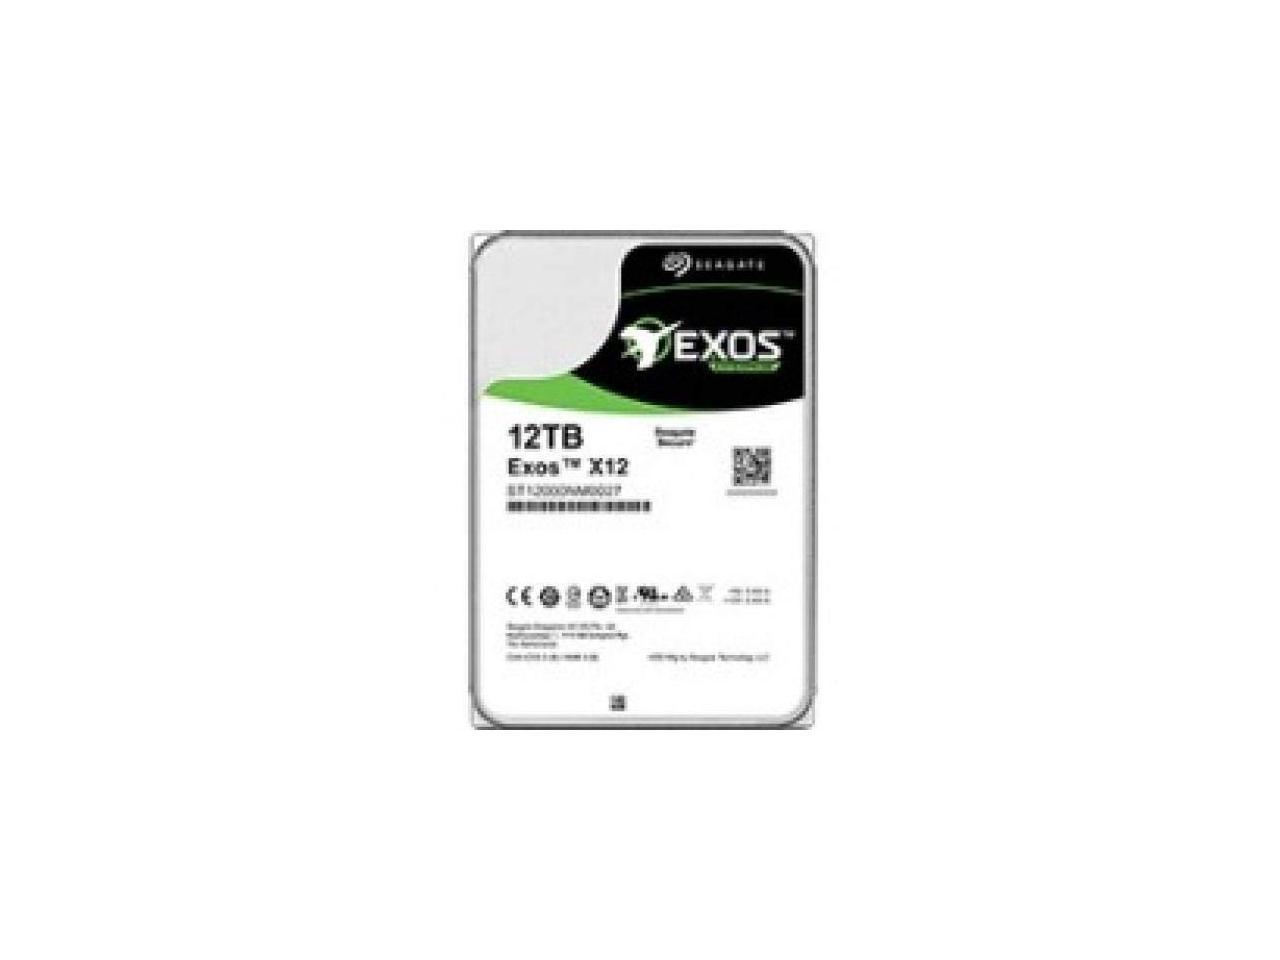 Seagate Exos X14 ST12000NM0278 12 TB Hard Drive - 512e/4Kn Format - SAS (12Gb/s SAS) - 3.5" Drive - Internal - 7200rpm - 256 MB Buffer